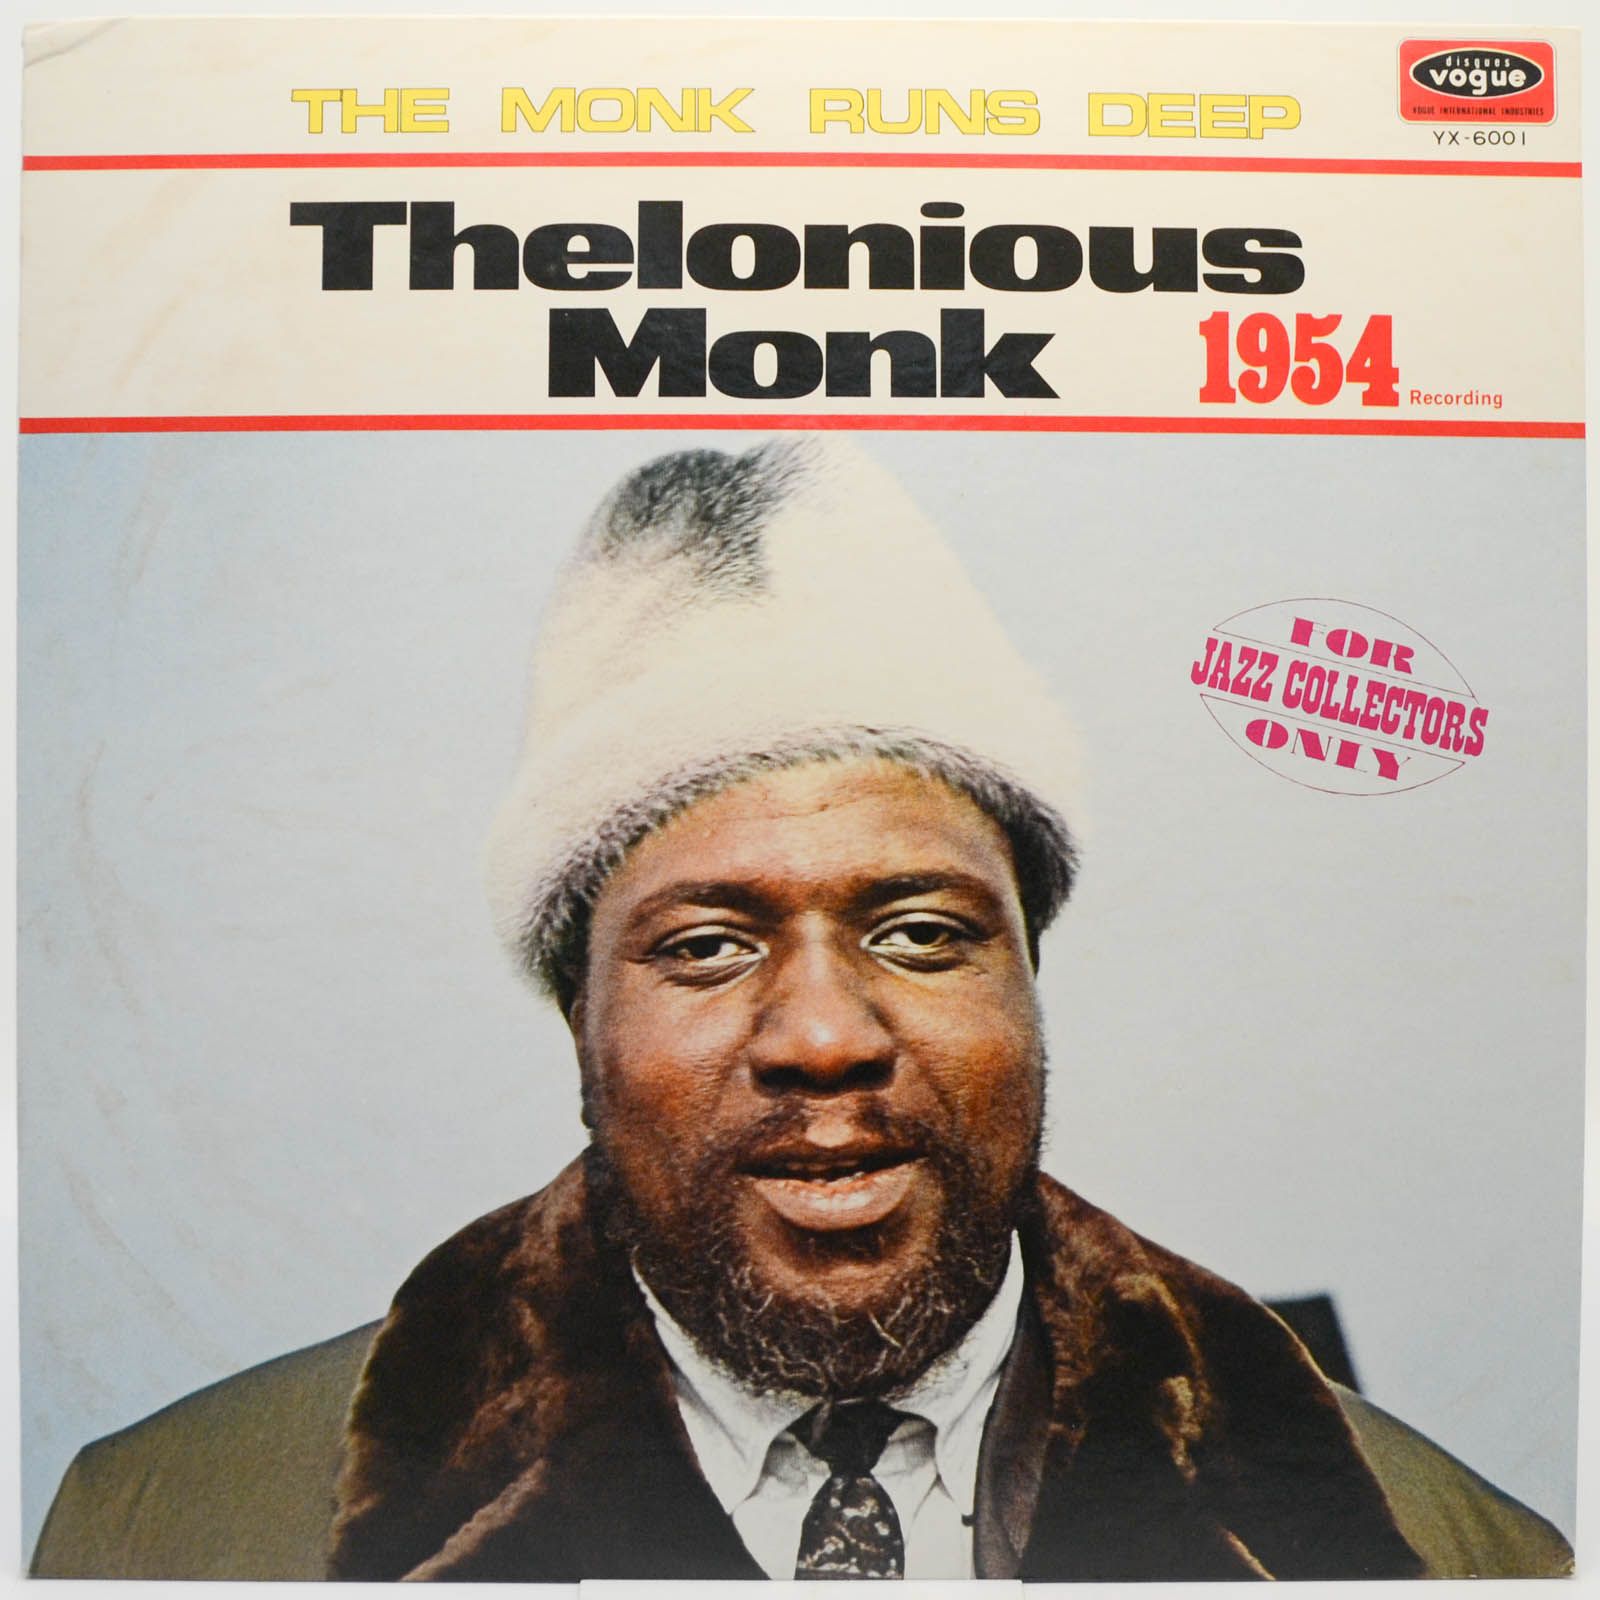 Thelonious Monk — The Monk Runs Deep, 1972